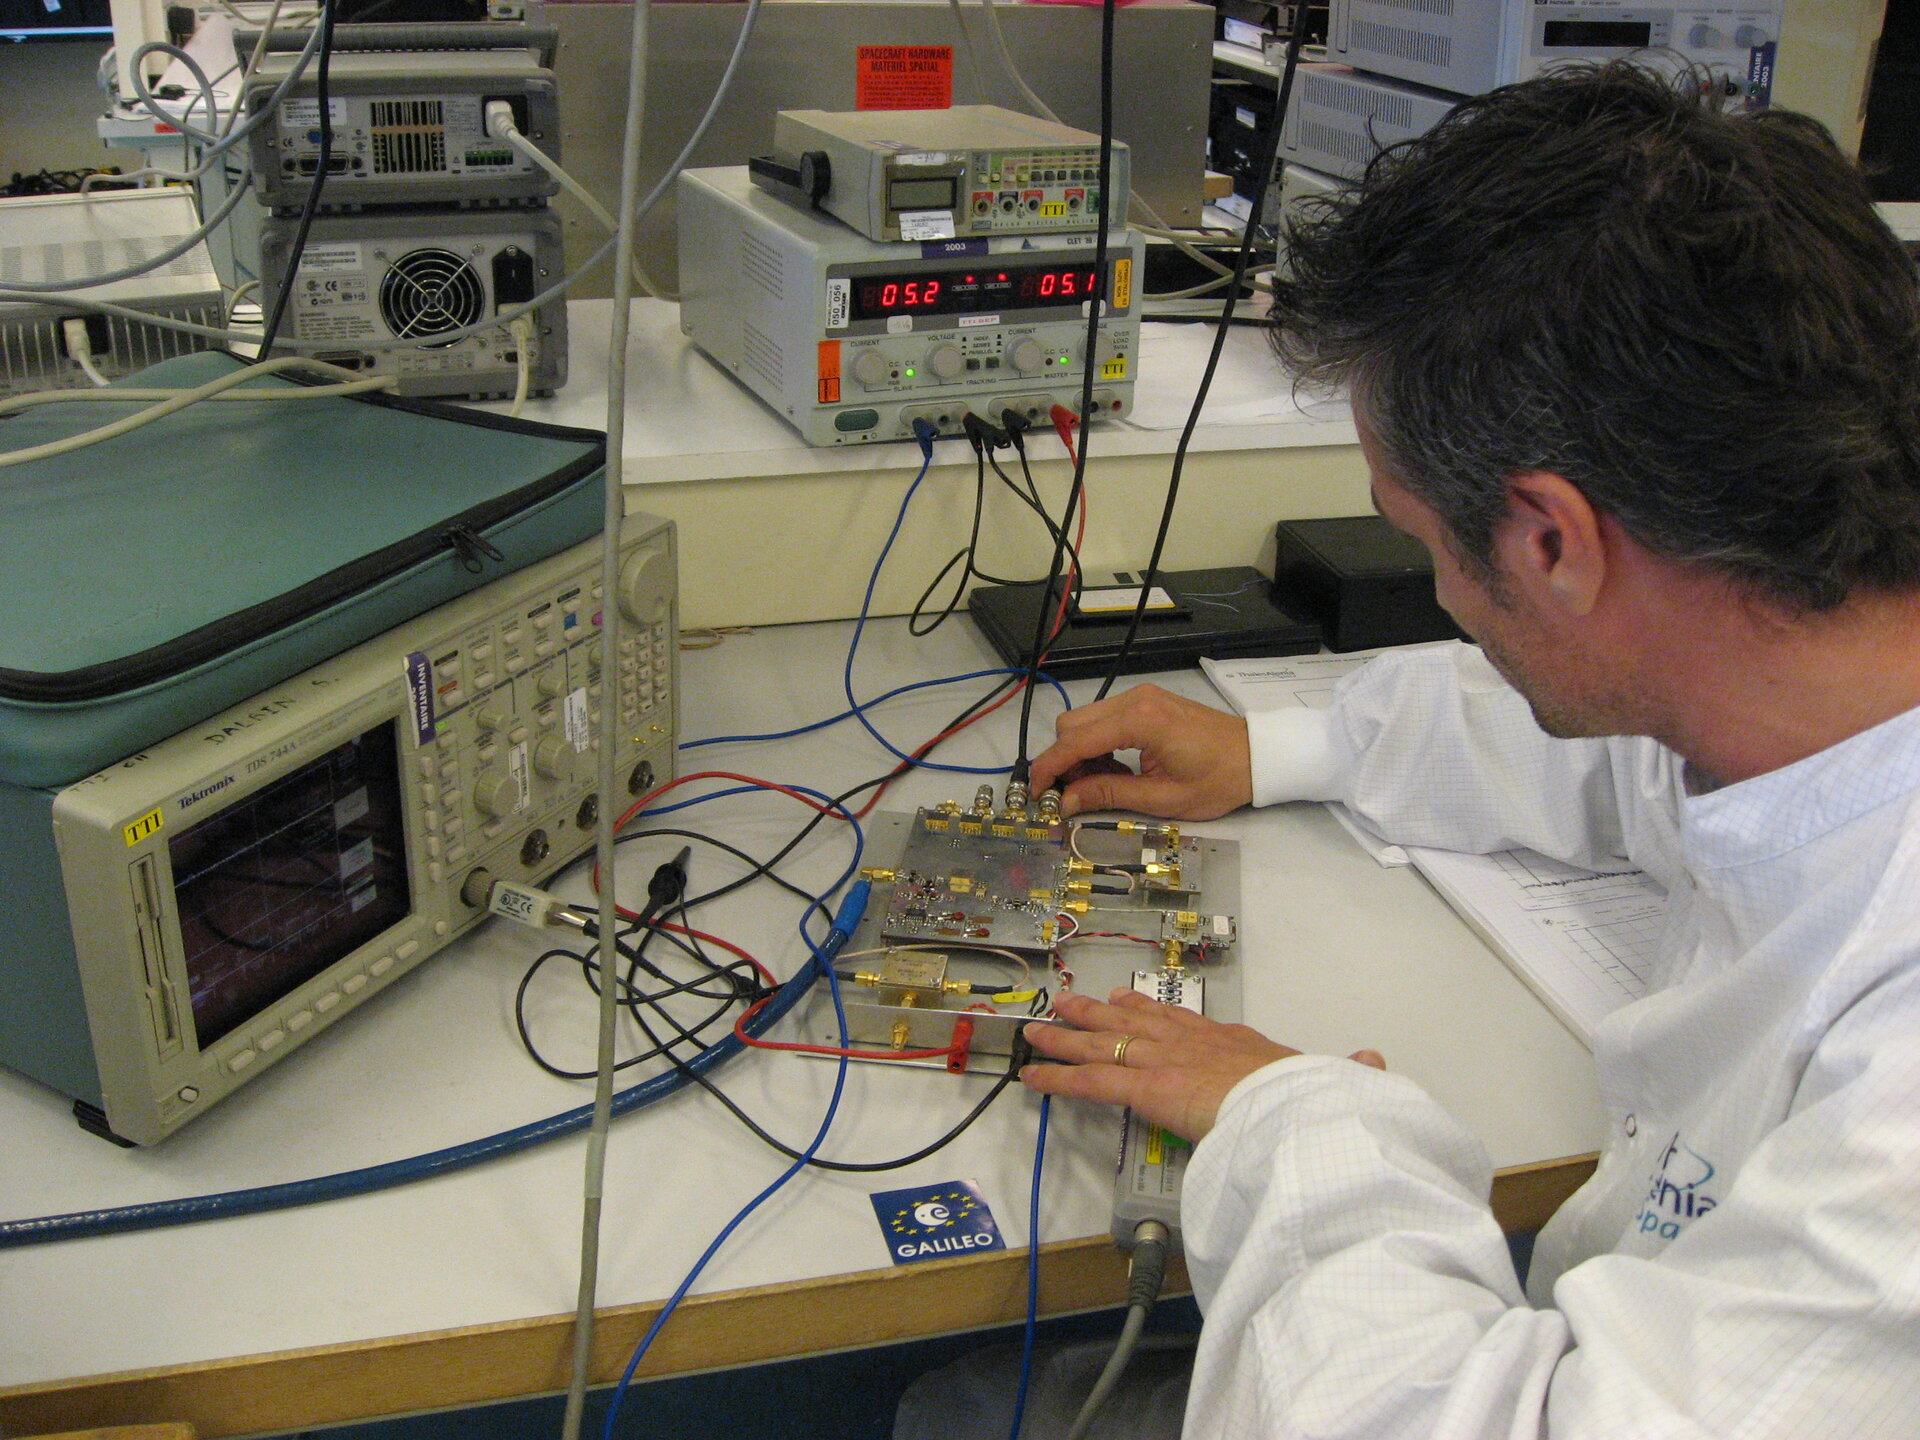 Galileo IOV satellite subsystem under test